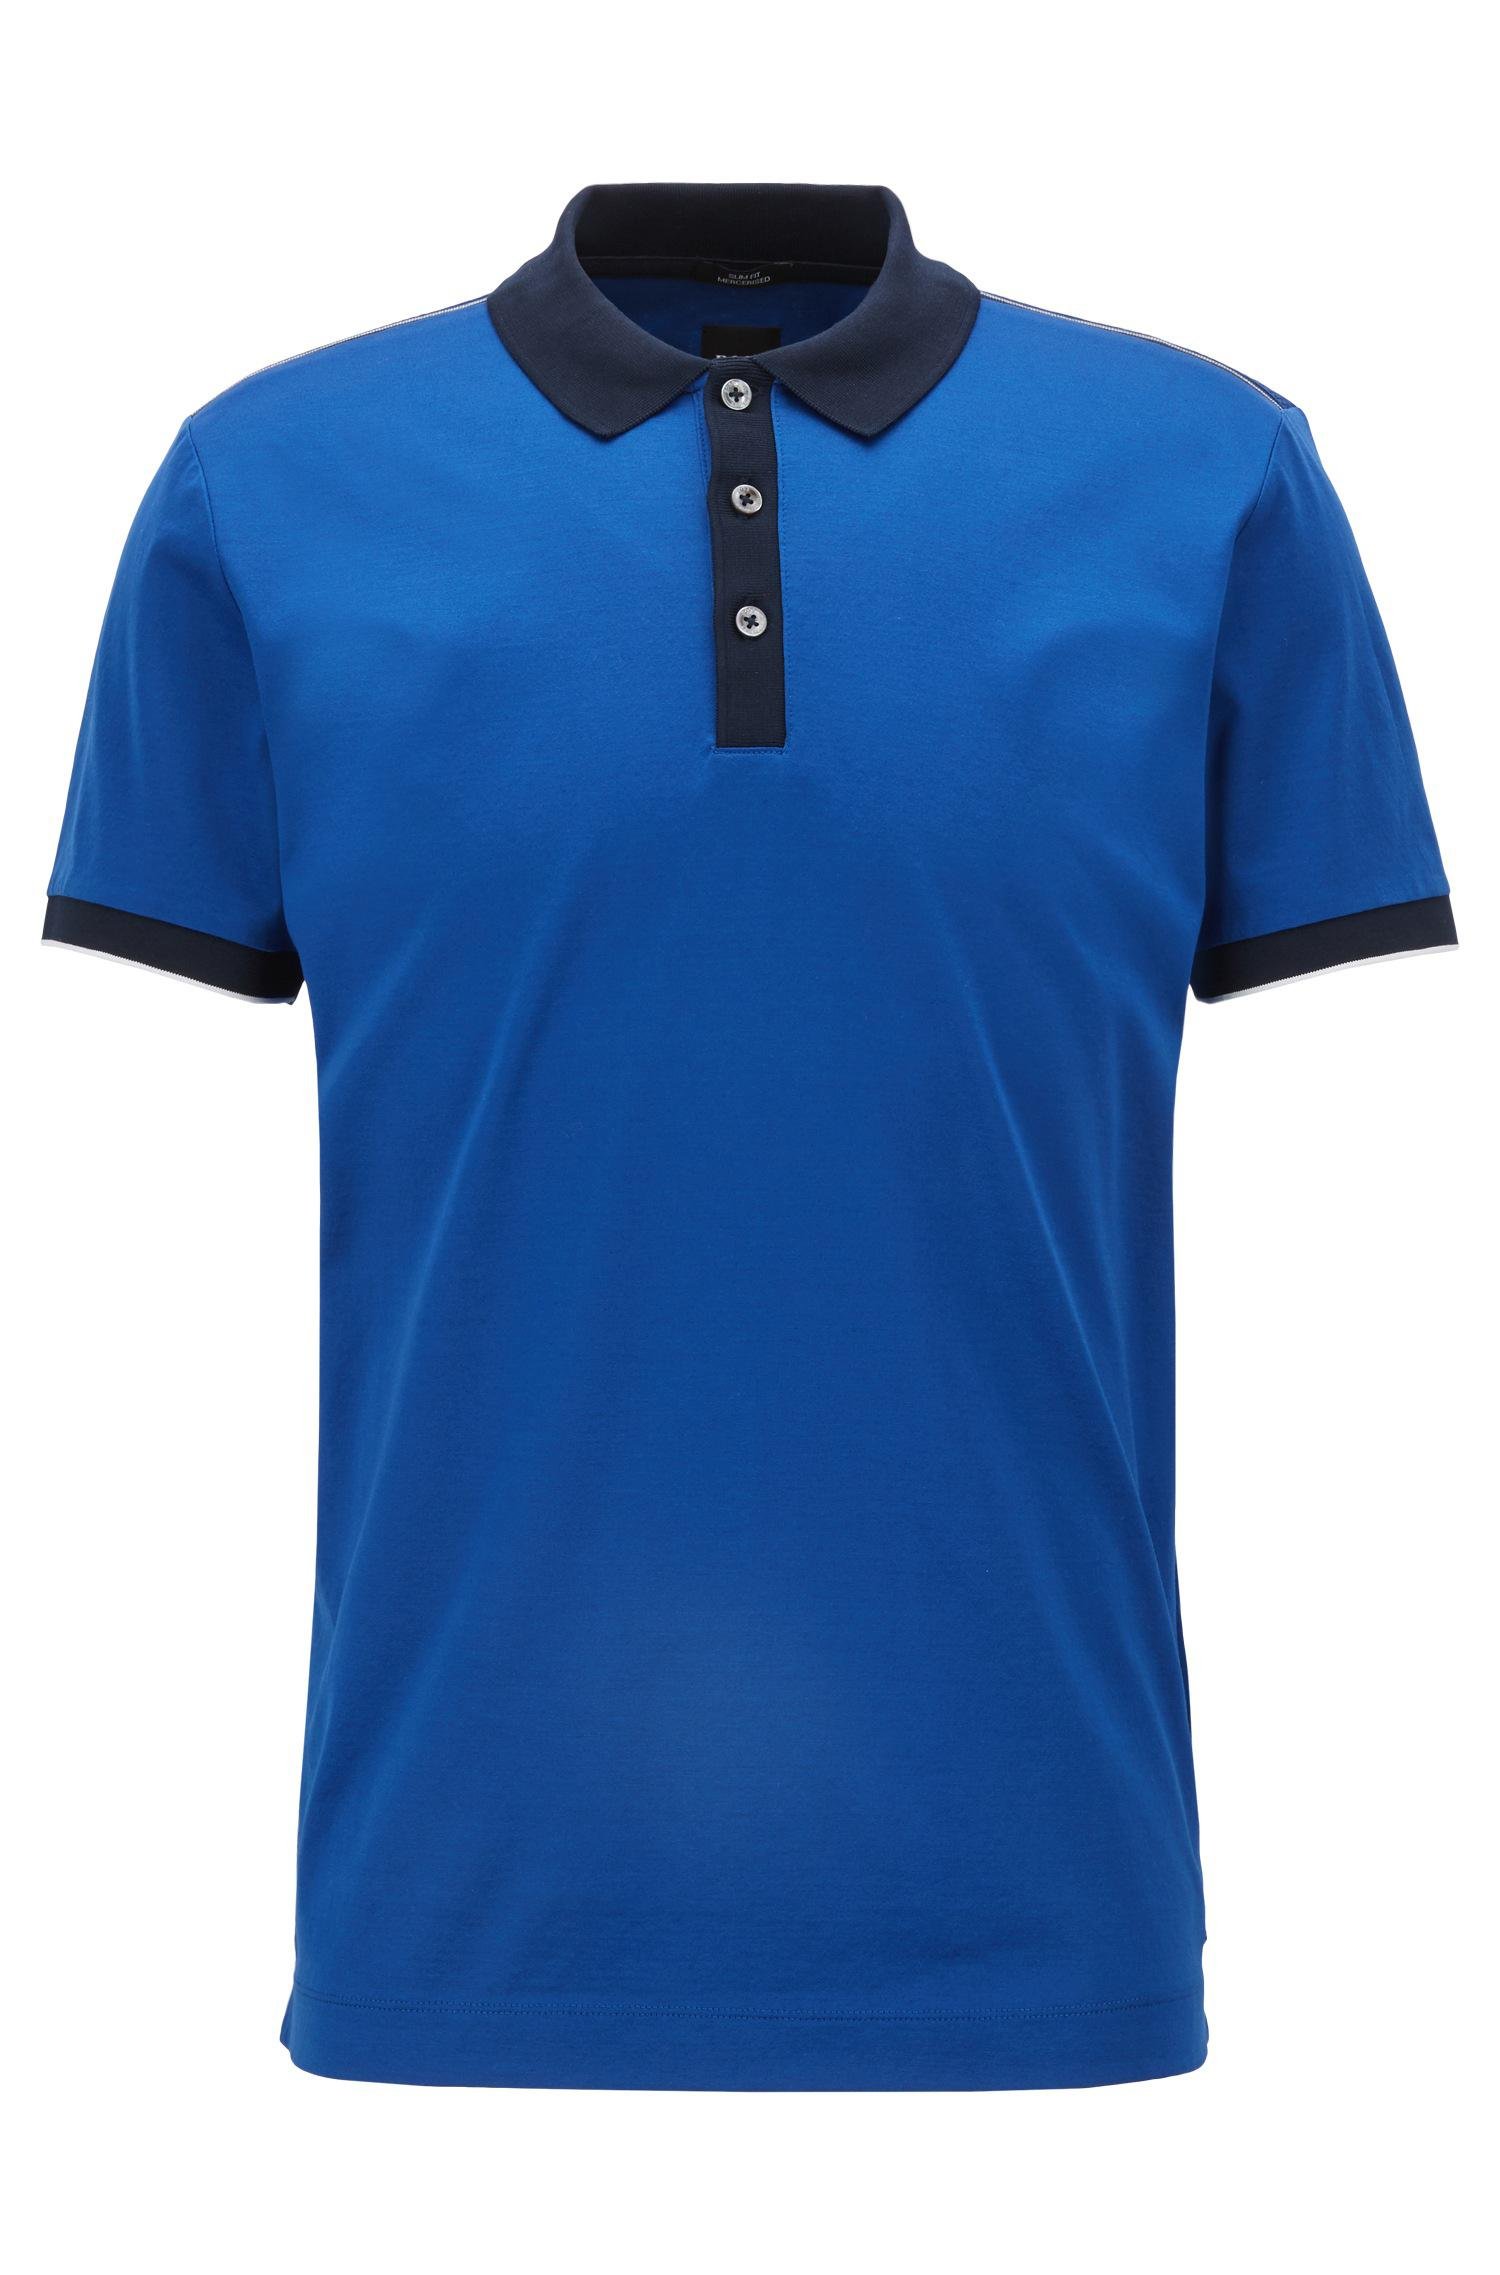 BOSS Slim-fit Polo Shirt In Mercerized Cotton in Blue for Men - Lyst